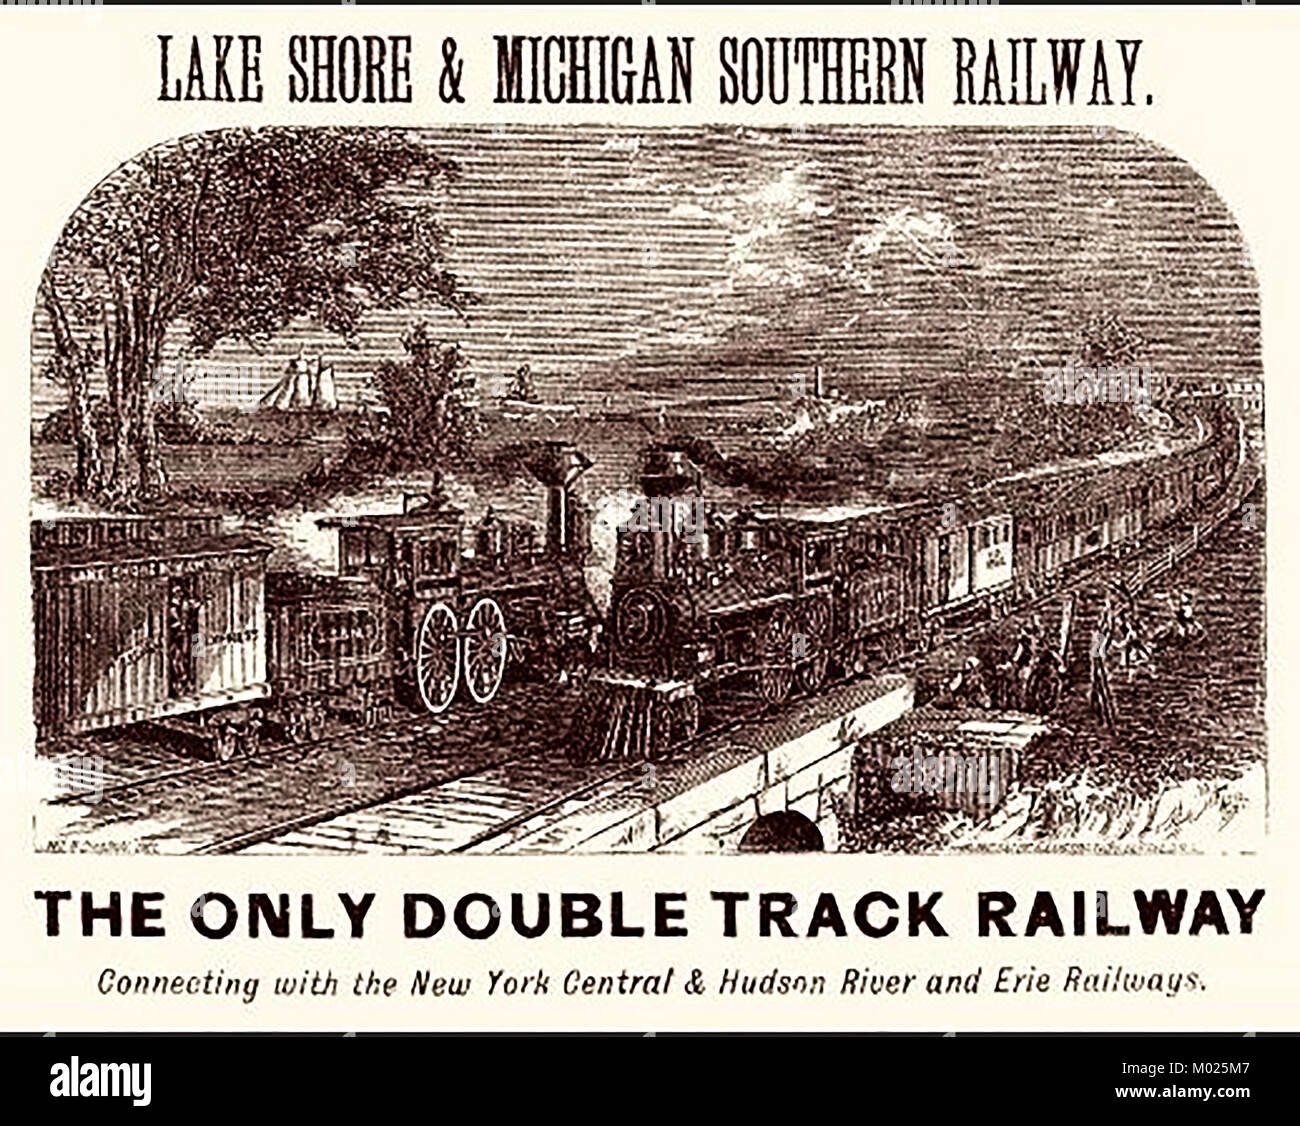 Lake Shore & Michigan Southern Railway 